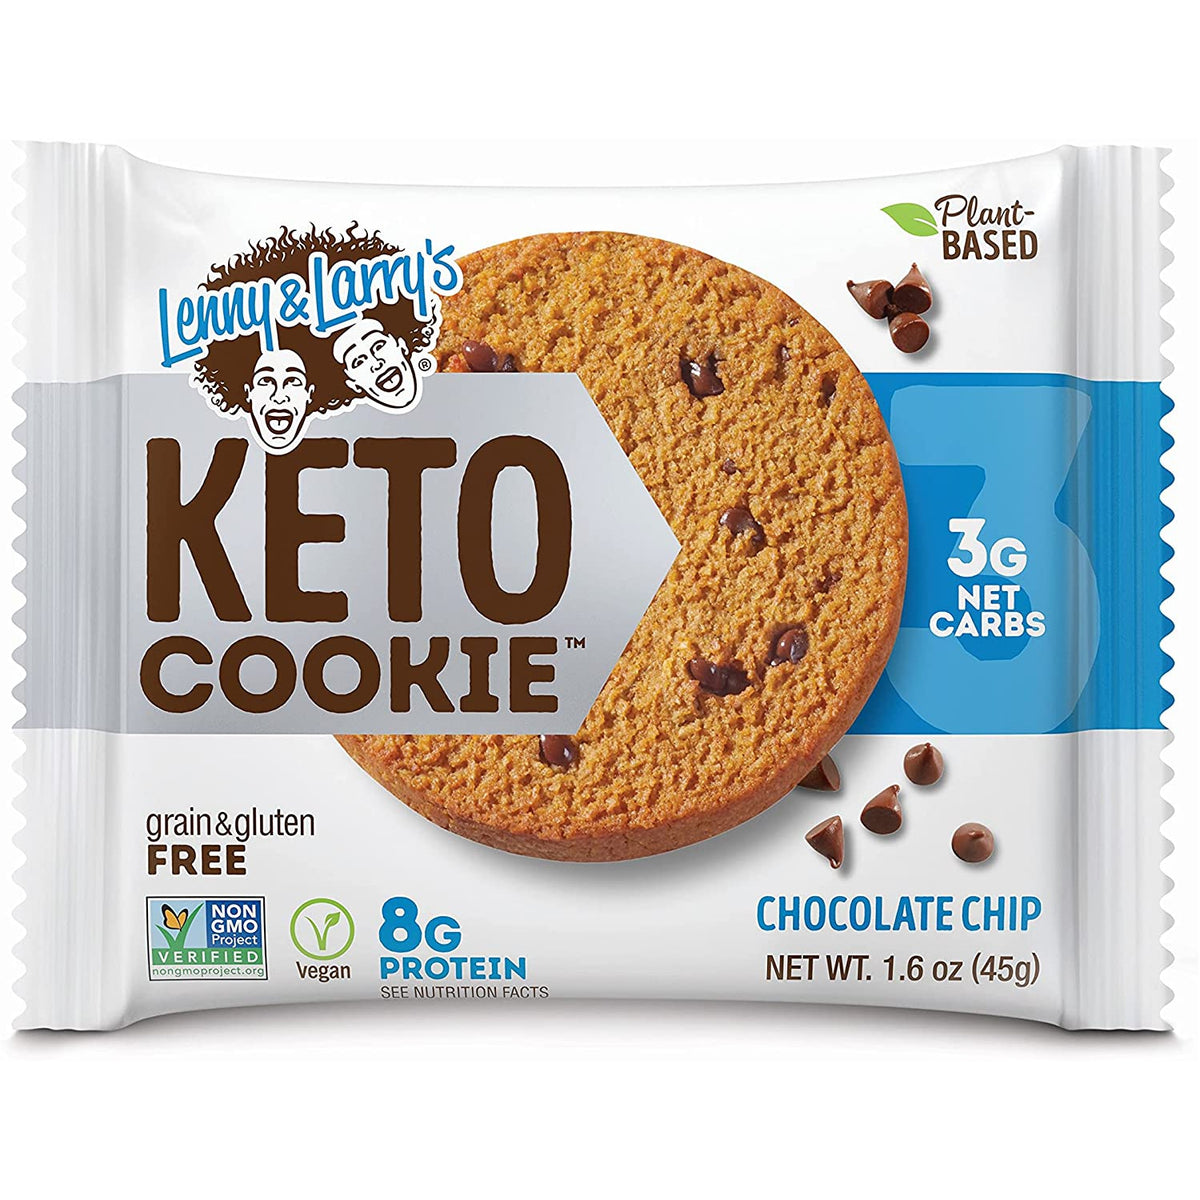 Lenny & Larry's Keto Cookie